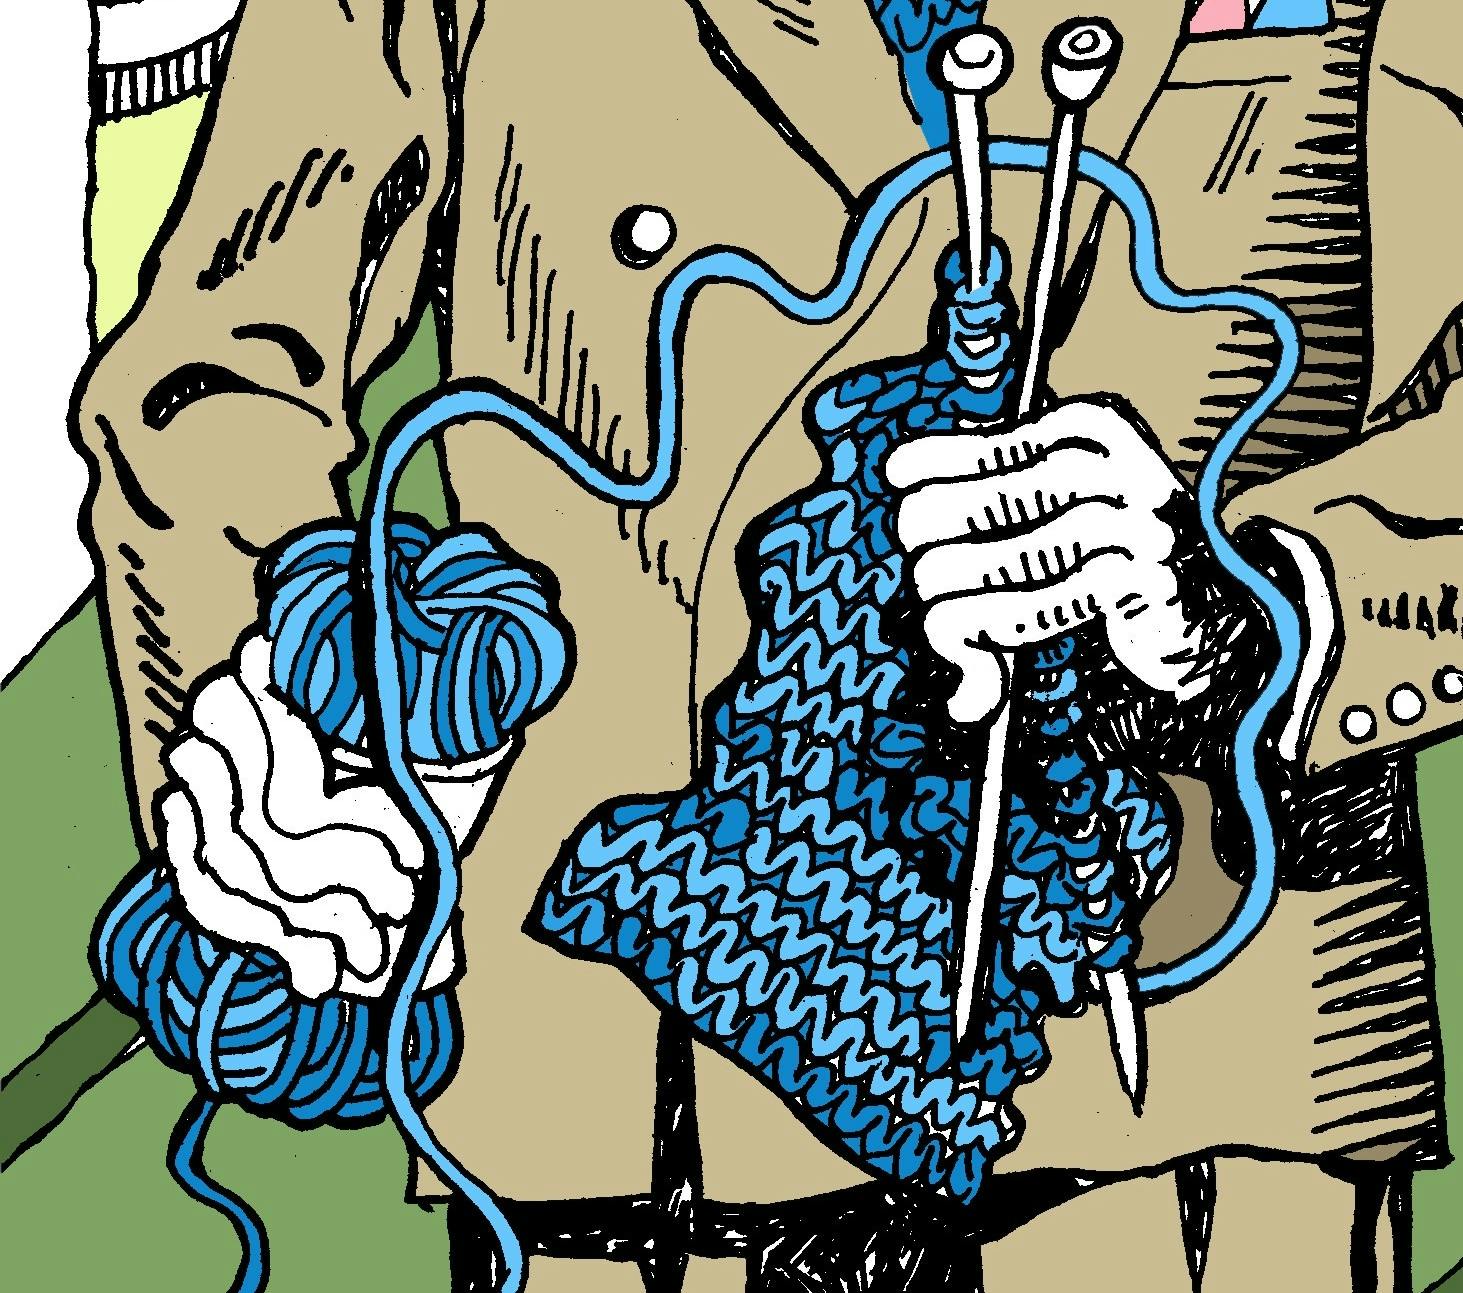 cartoon of mans hands holding knitting